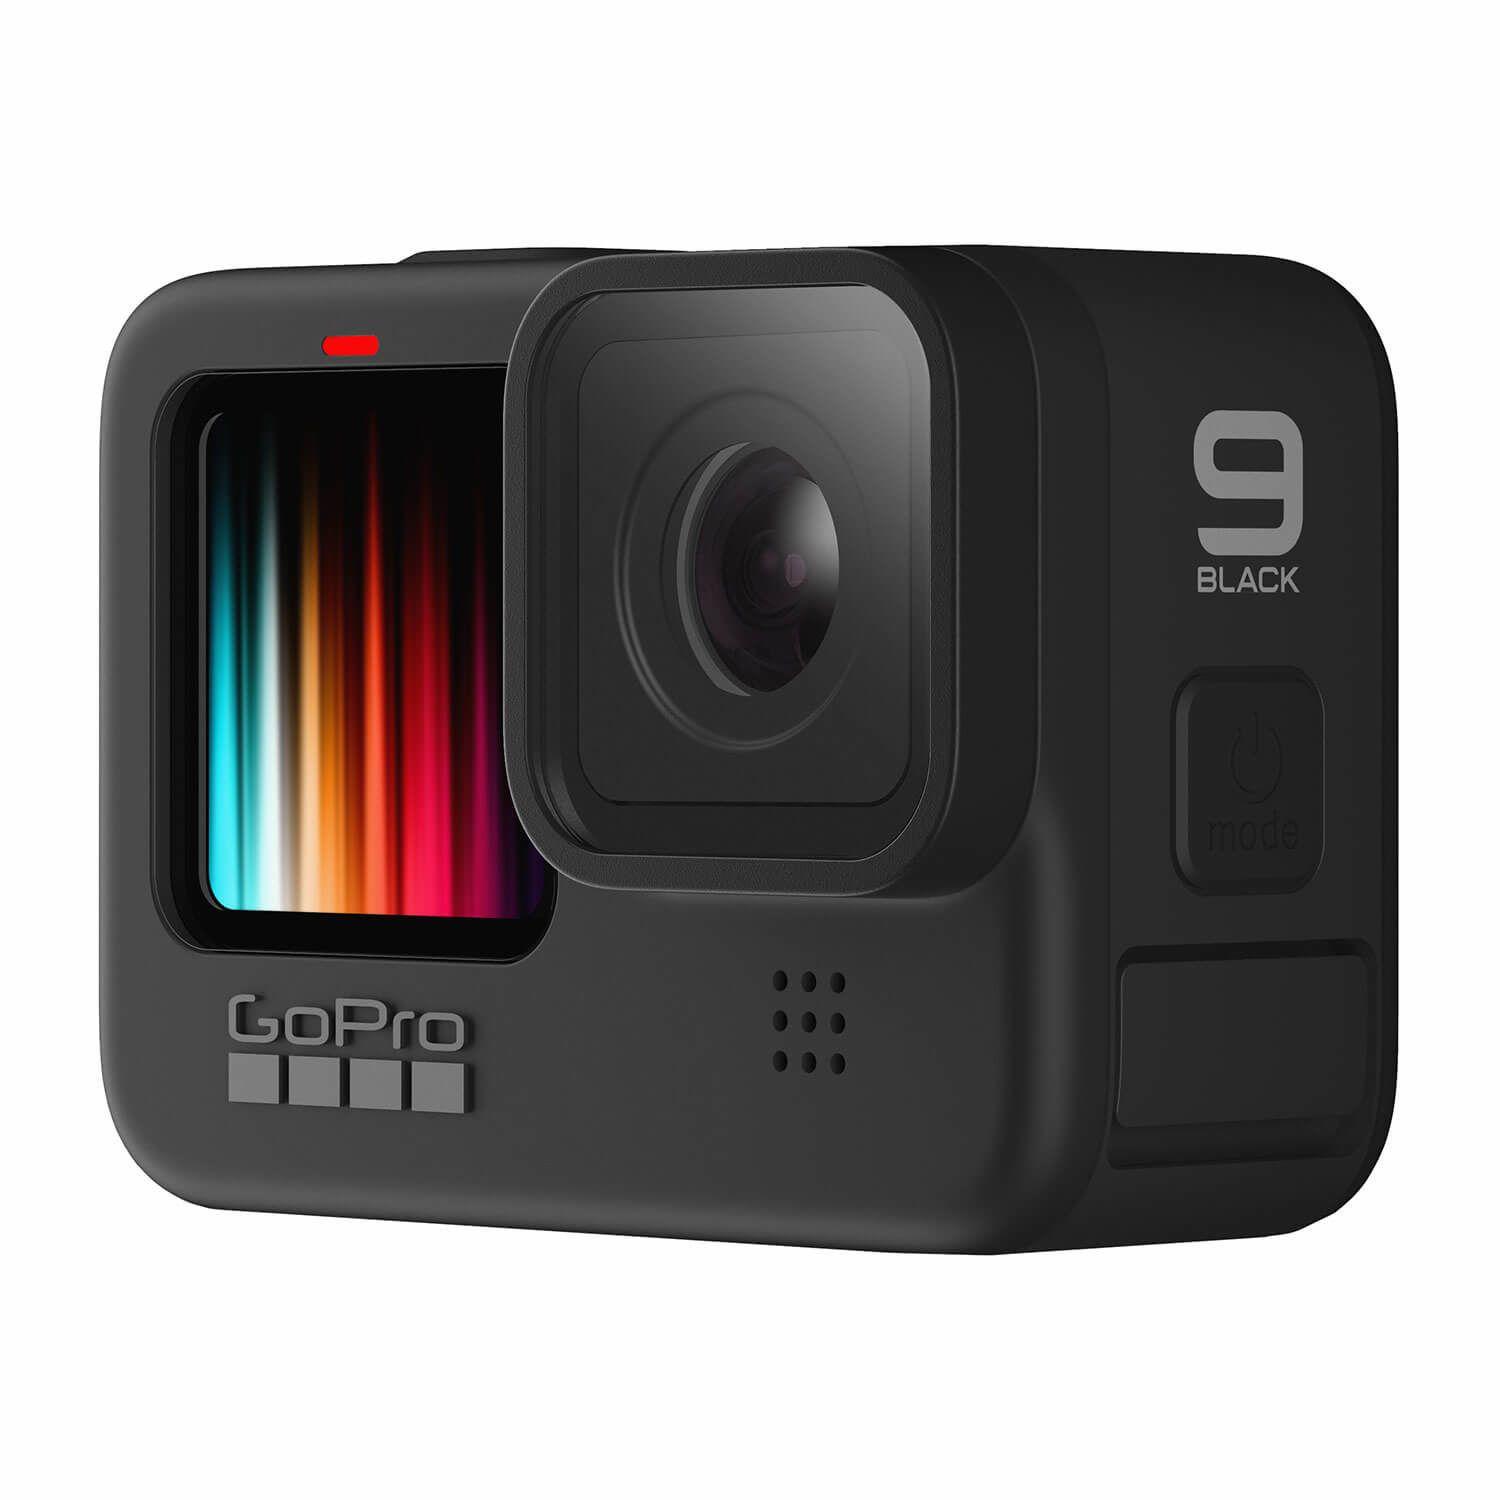 Gopro-hero9-black-action-camera-cameradeals.be